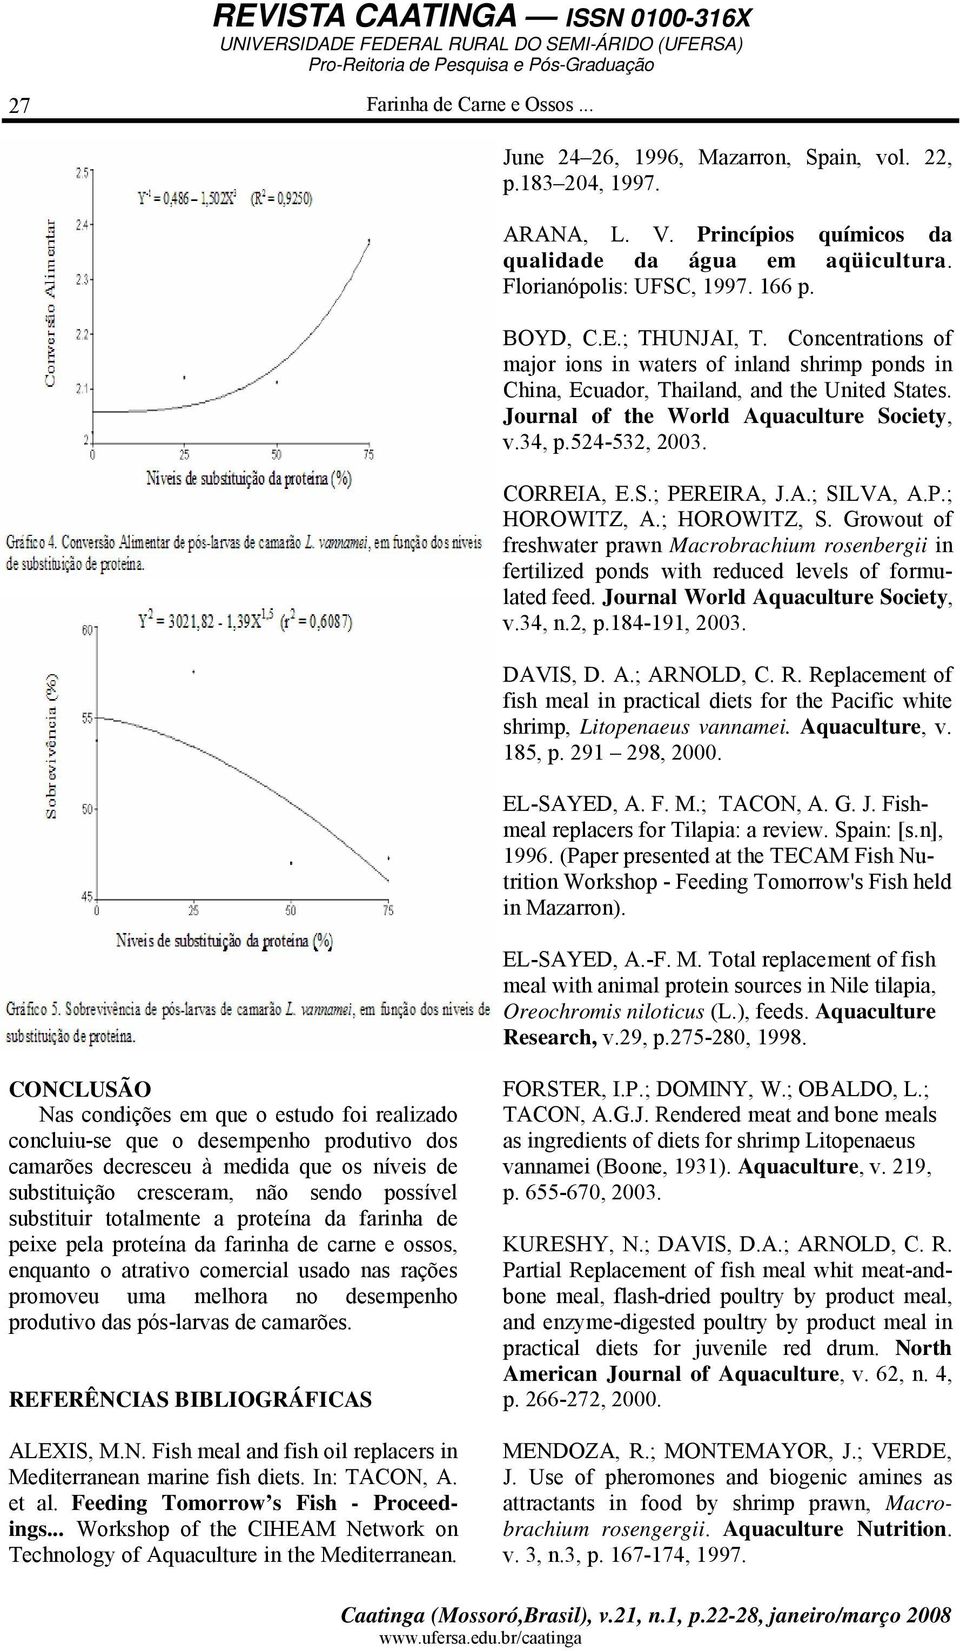 524-532, 2003. CORREIA, E.S.; PEREIRA, J.A.; SILVA, A.P.; HOROWITZ, A.; HOROWITZ, S. Growout of freshwater prawn Macrobrachium rosenbergii in fertilized ponds with reduced levels of formulated feed.